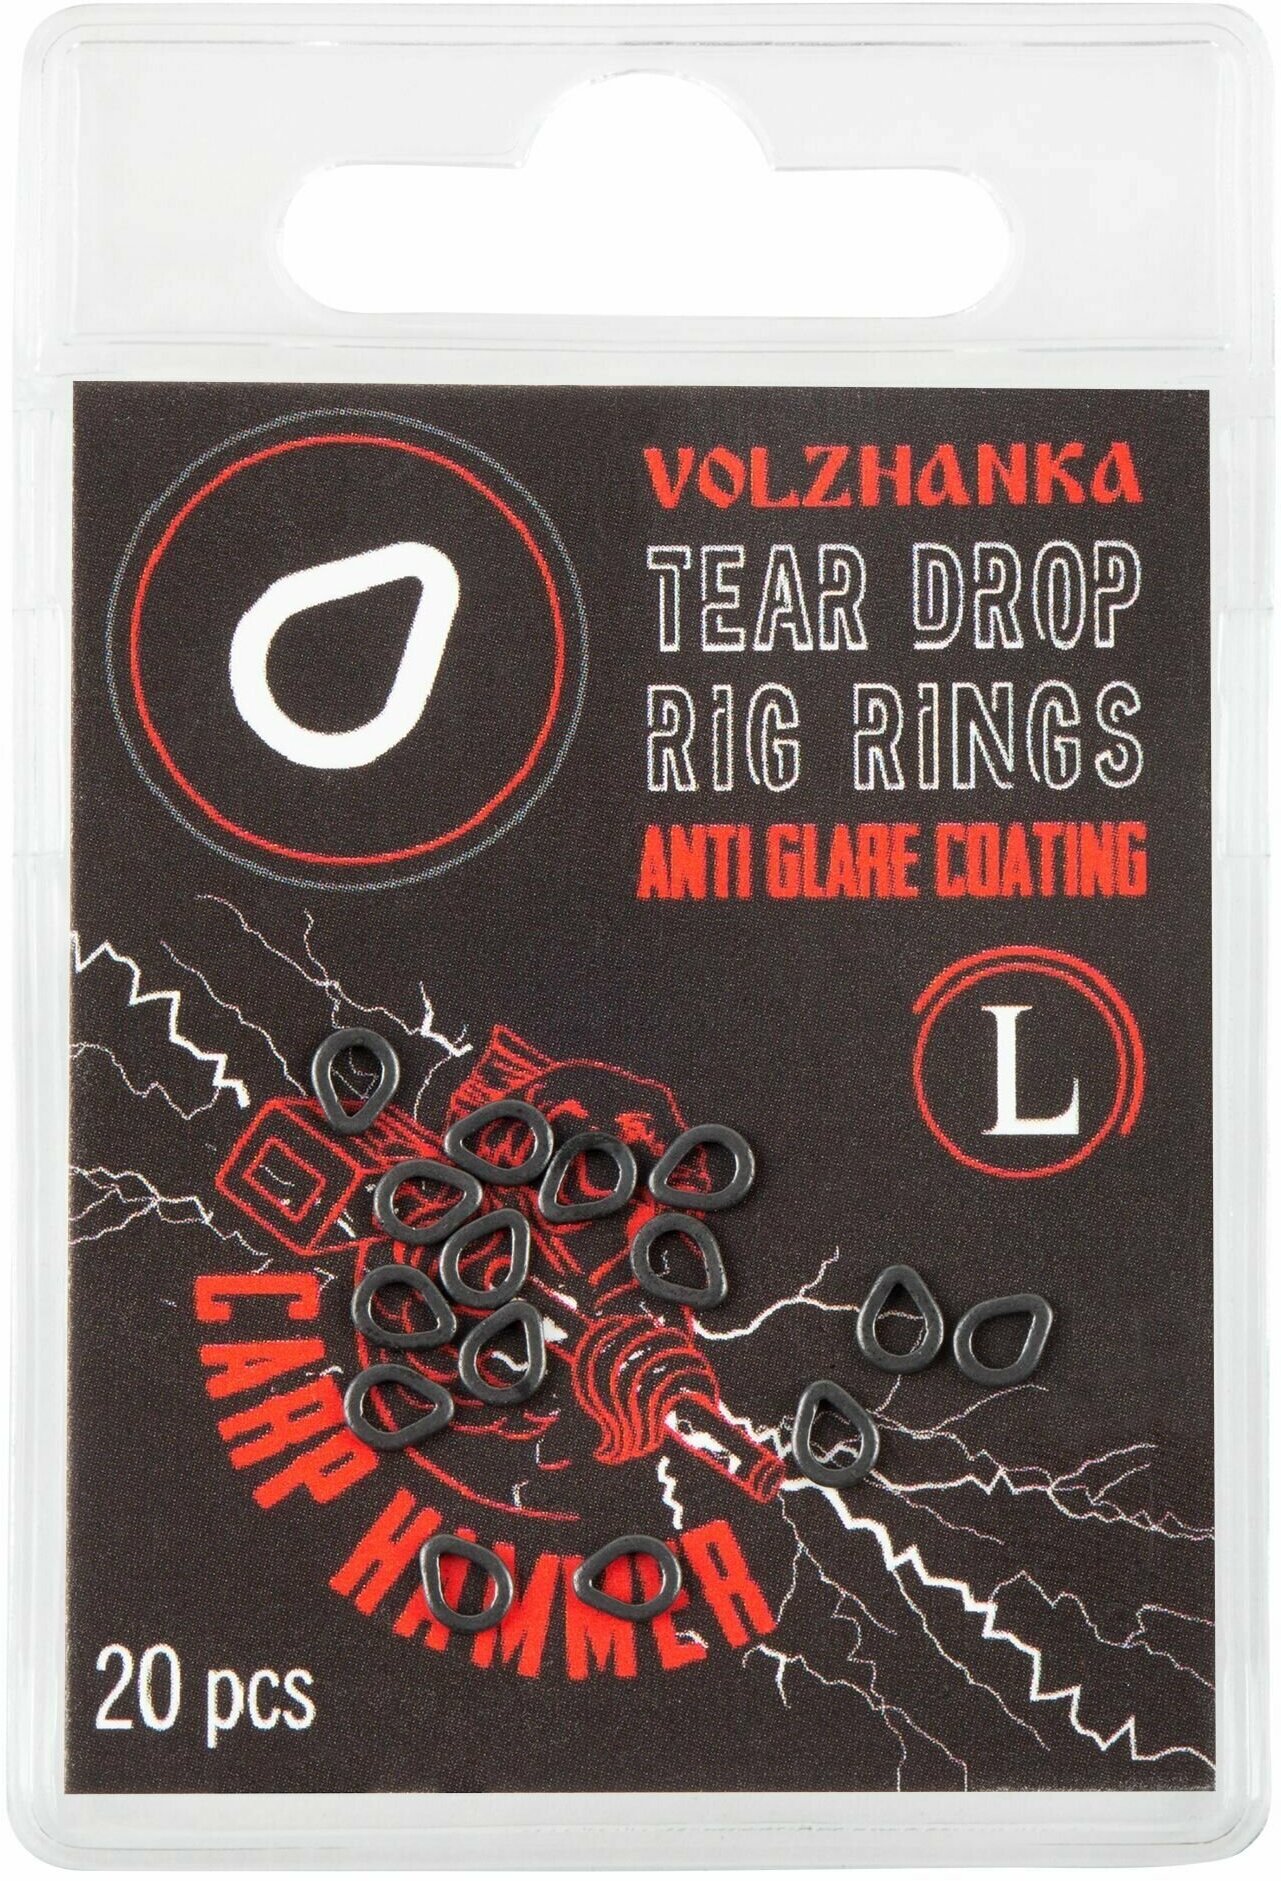 Волжанка Кольцо для монтажа "Volzhanka Tear Drop Rig Rings" # L (20шт/уп), Волжанка аксессуар для карповой ловли Карп Хаммер